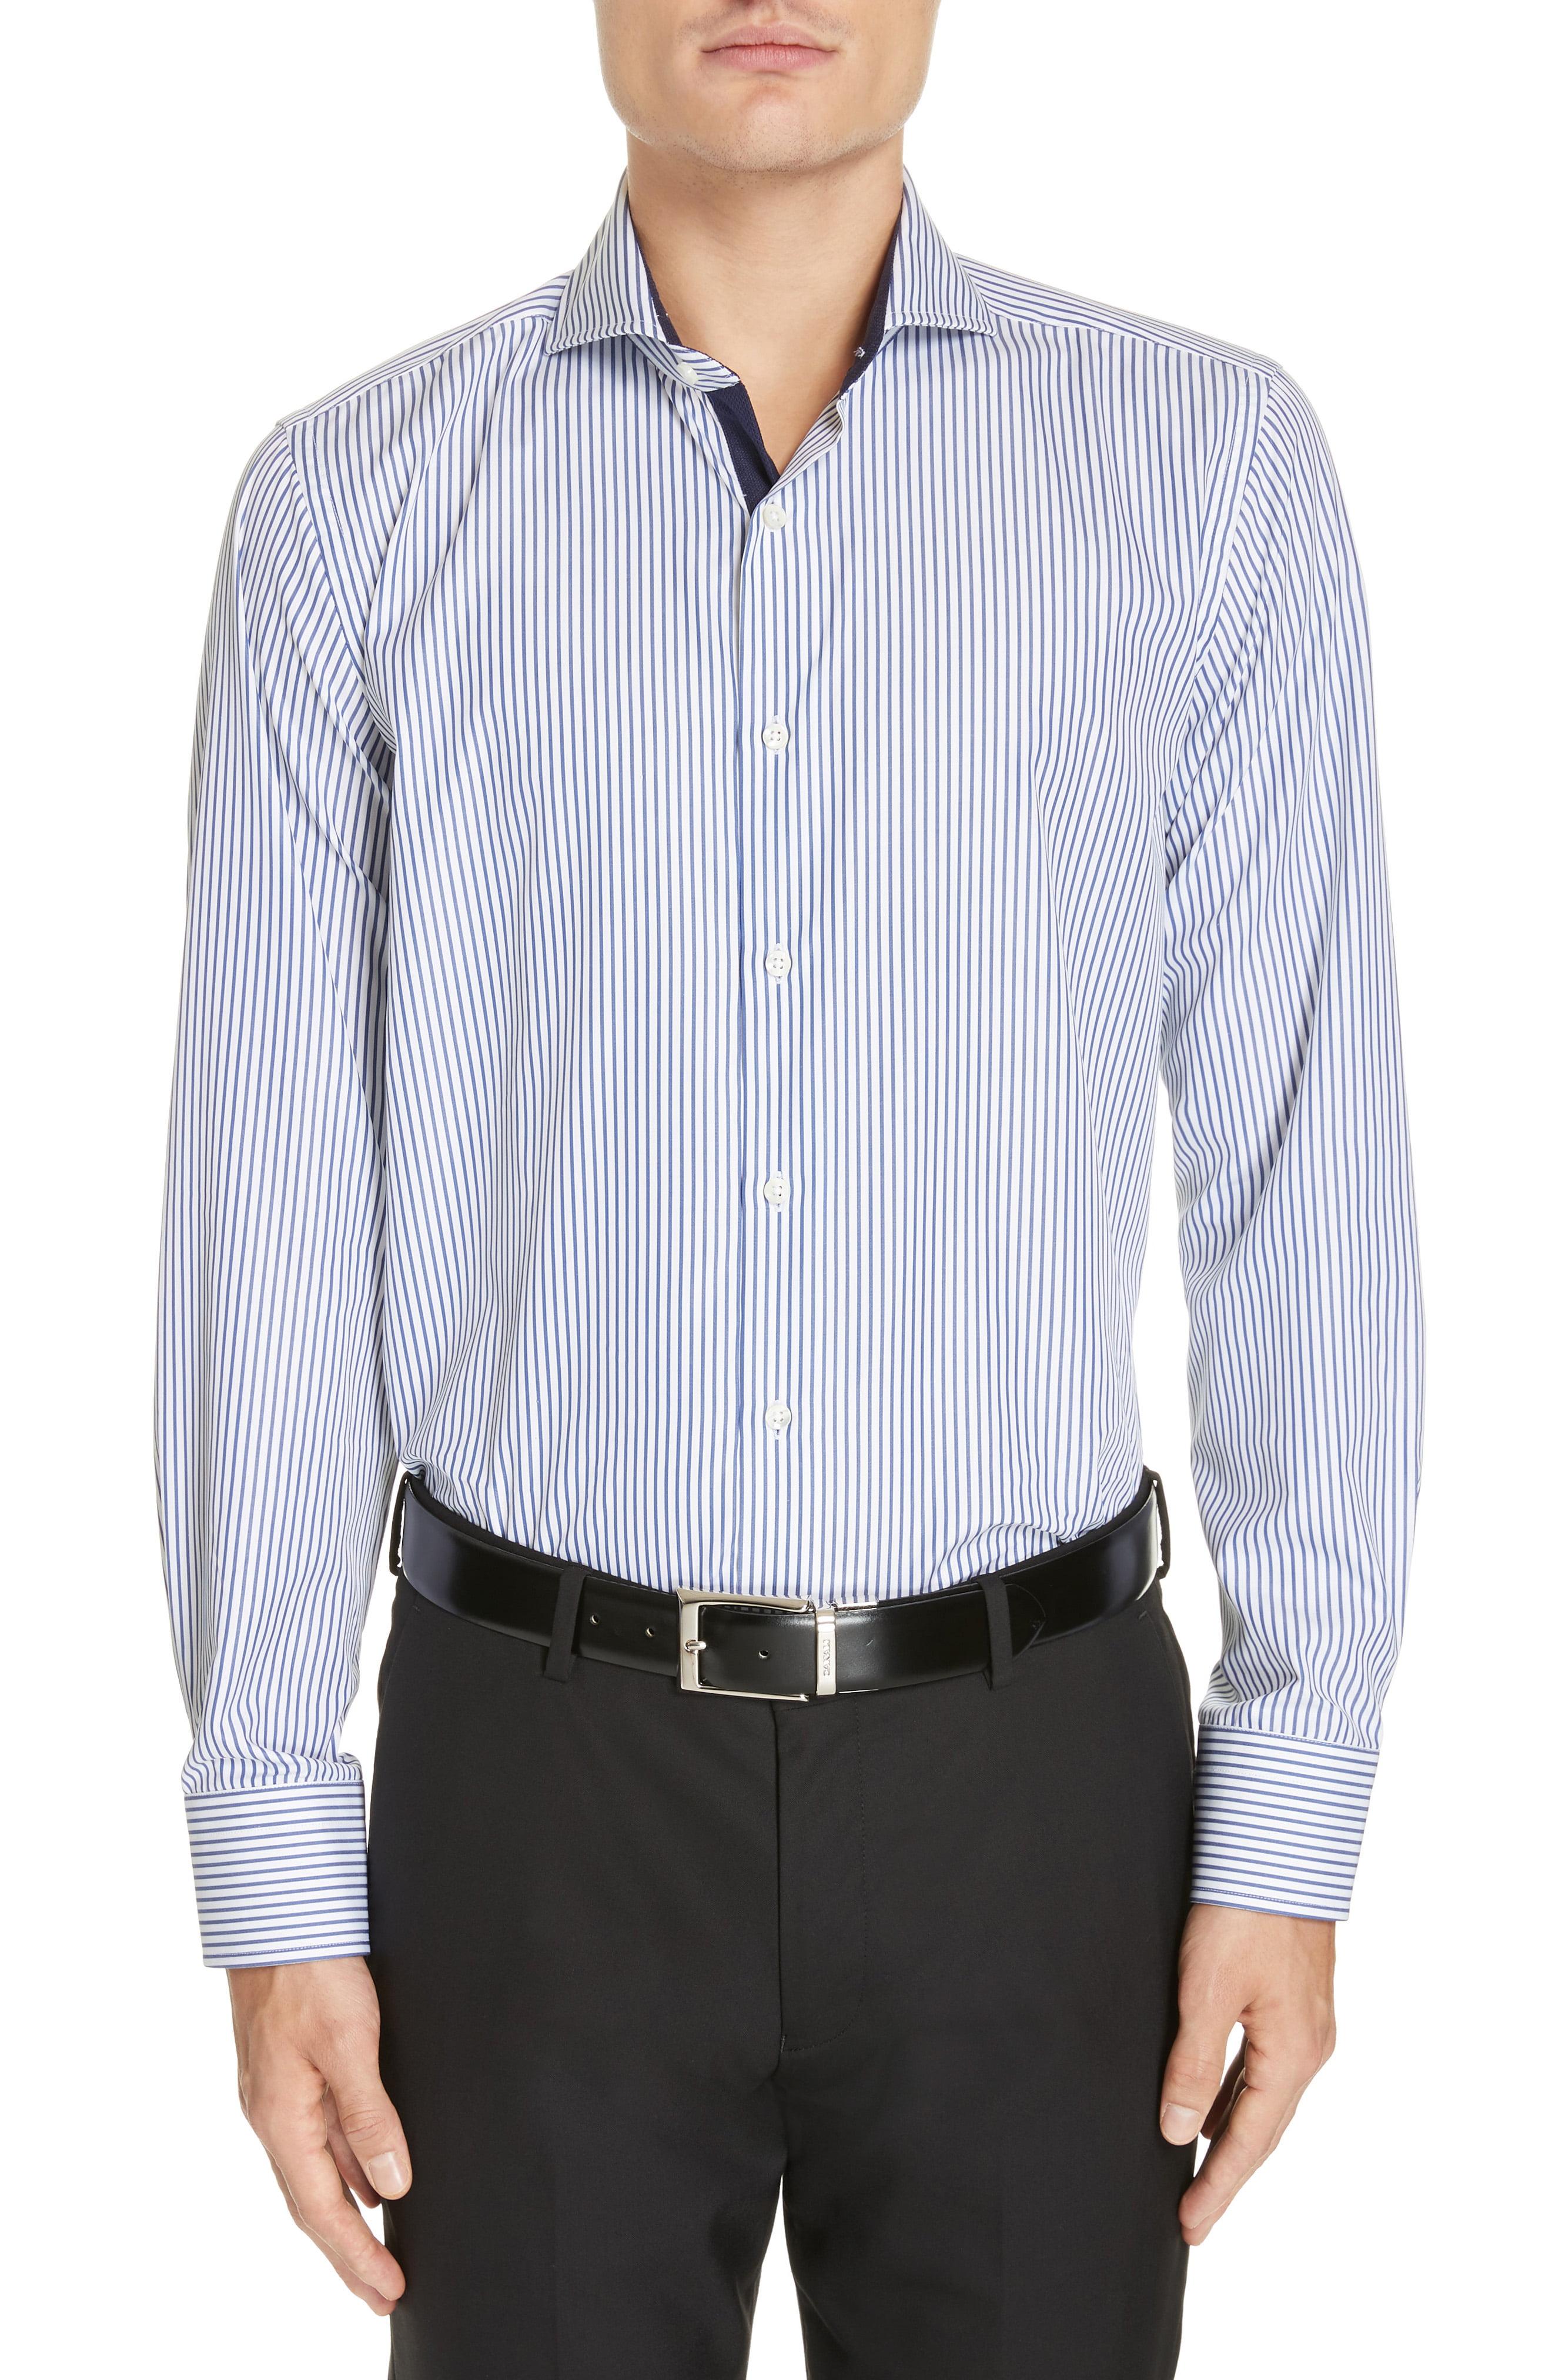 Lyst - Canali Regular Fit Stripe Dress Shirt in Blue for Men